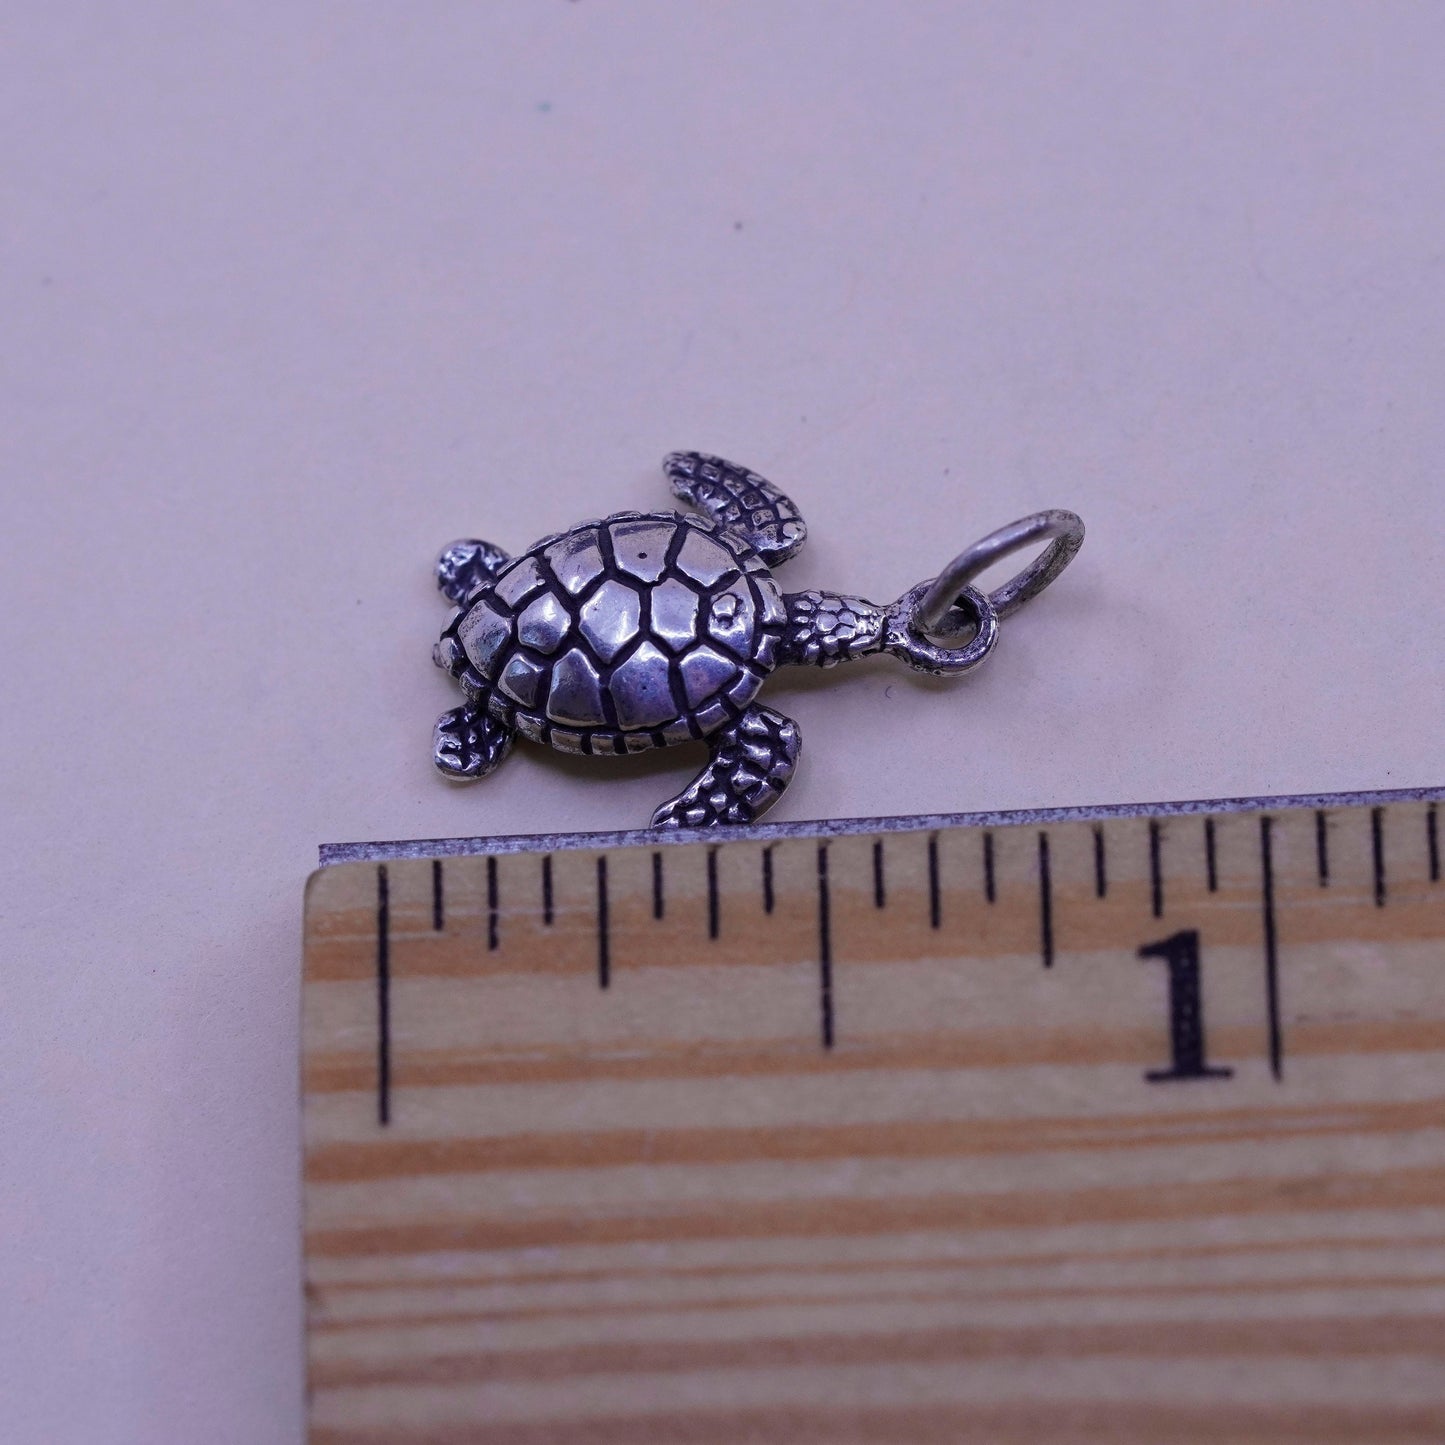 Vintage sterling silver handmade pendant, 925 turtle charm